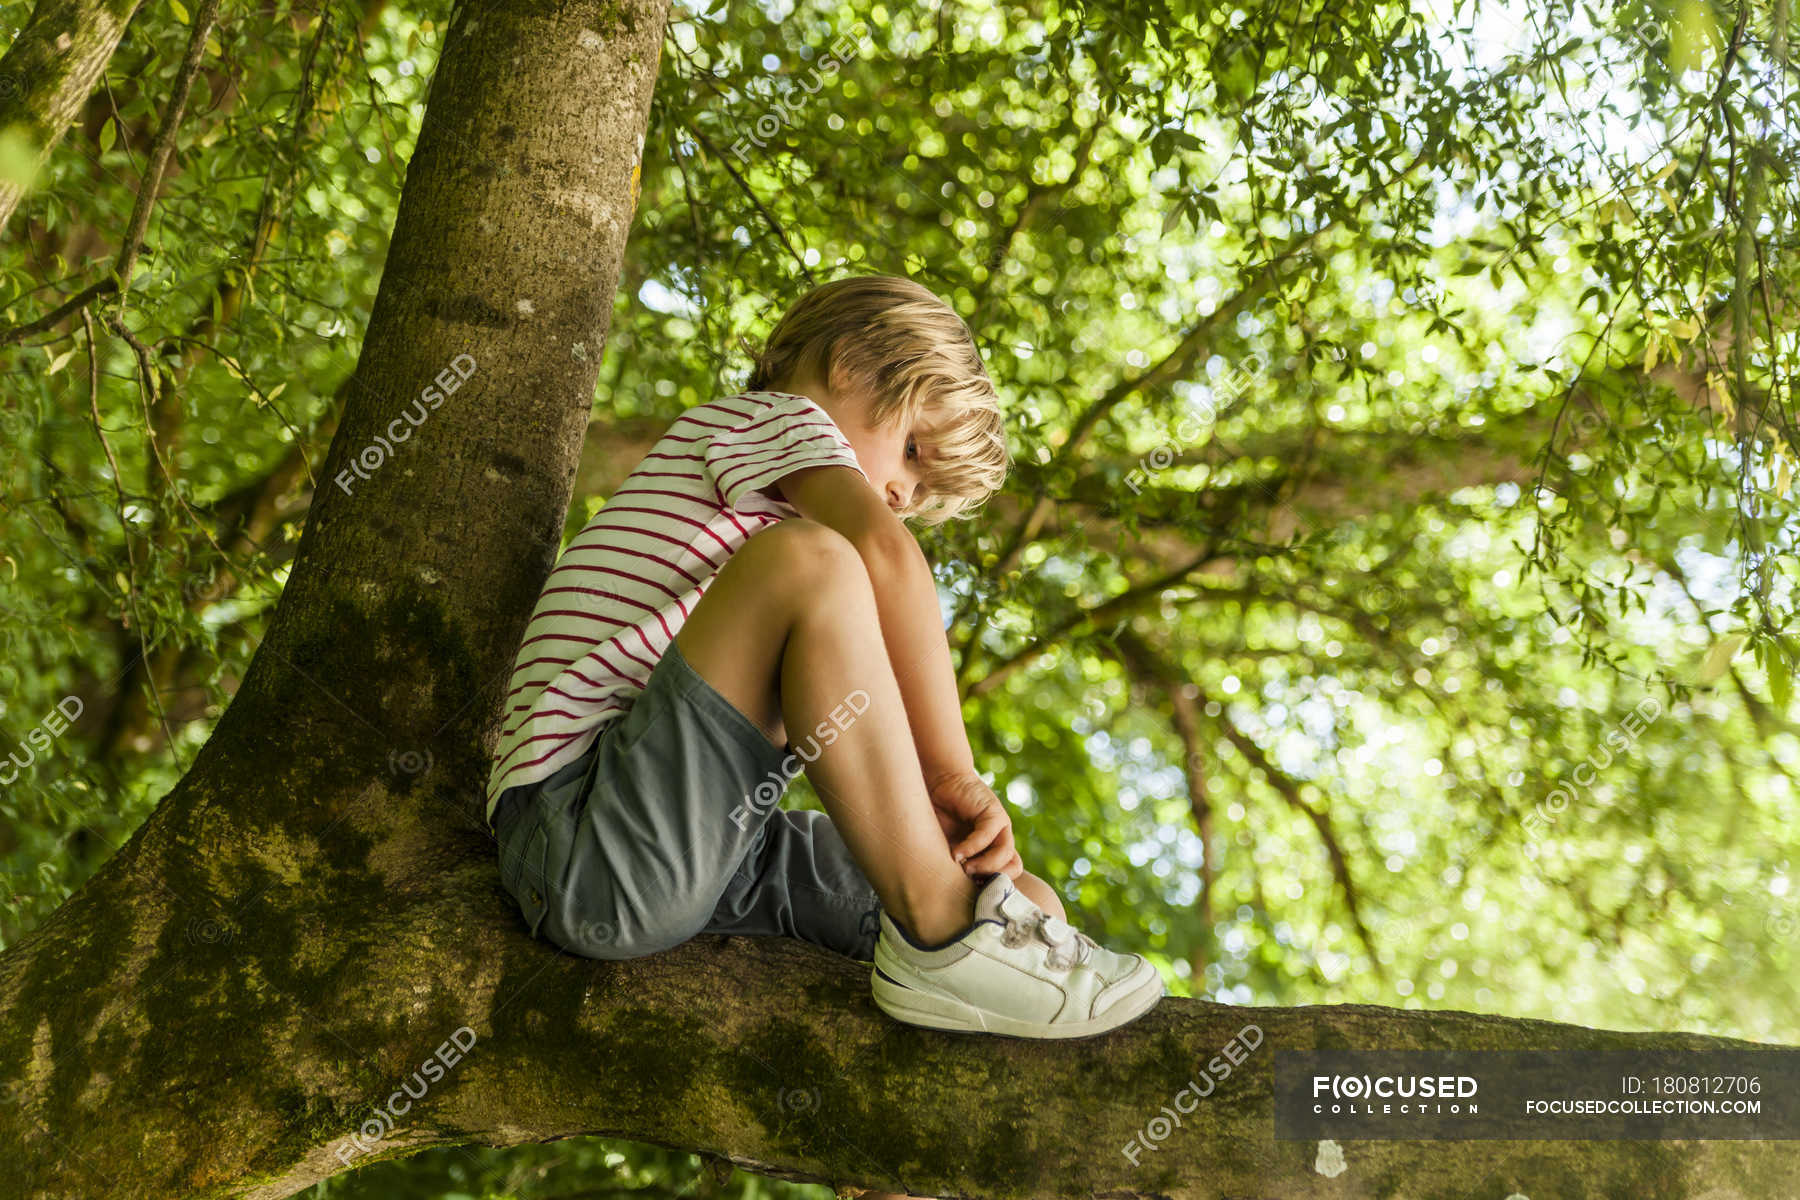 focused_180812706-stock-photo-little-boy-sitting-tree-forest.jpg